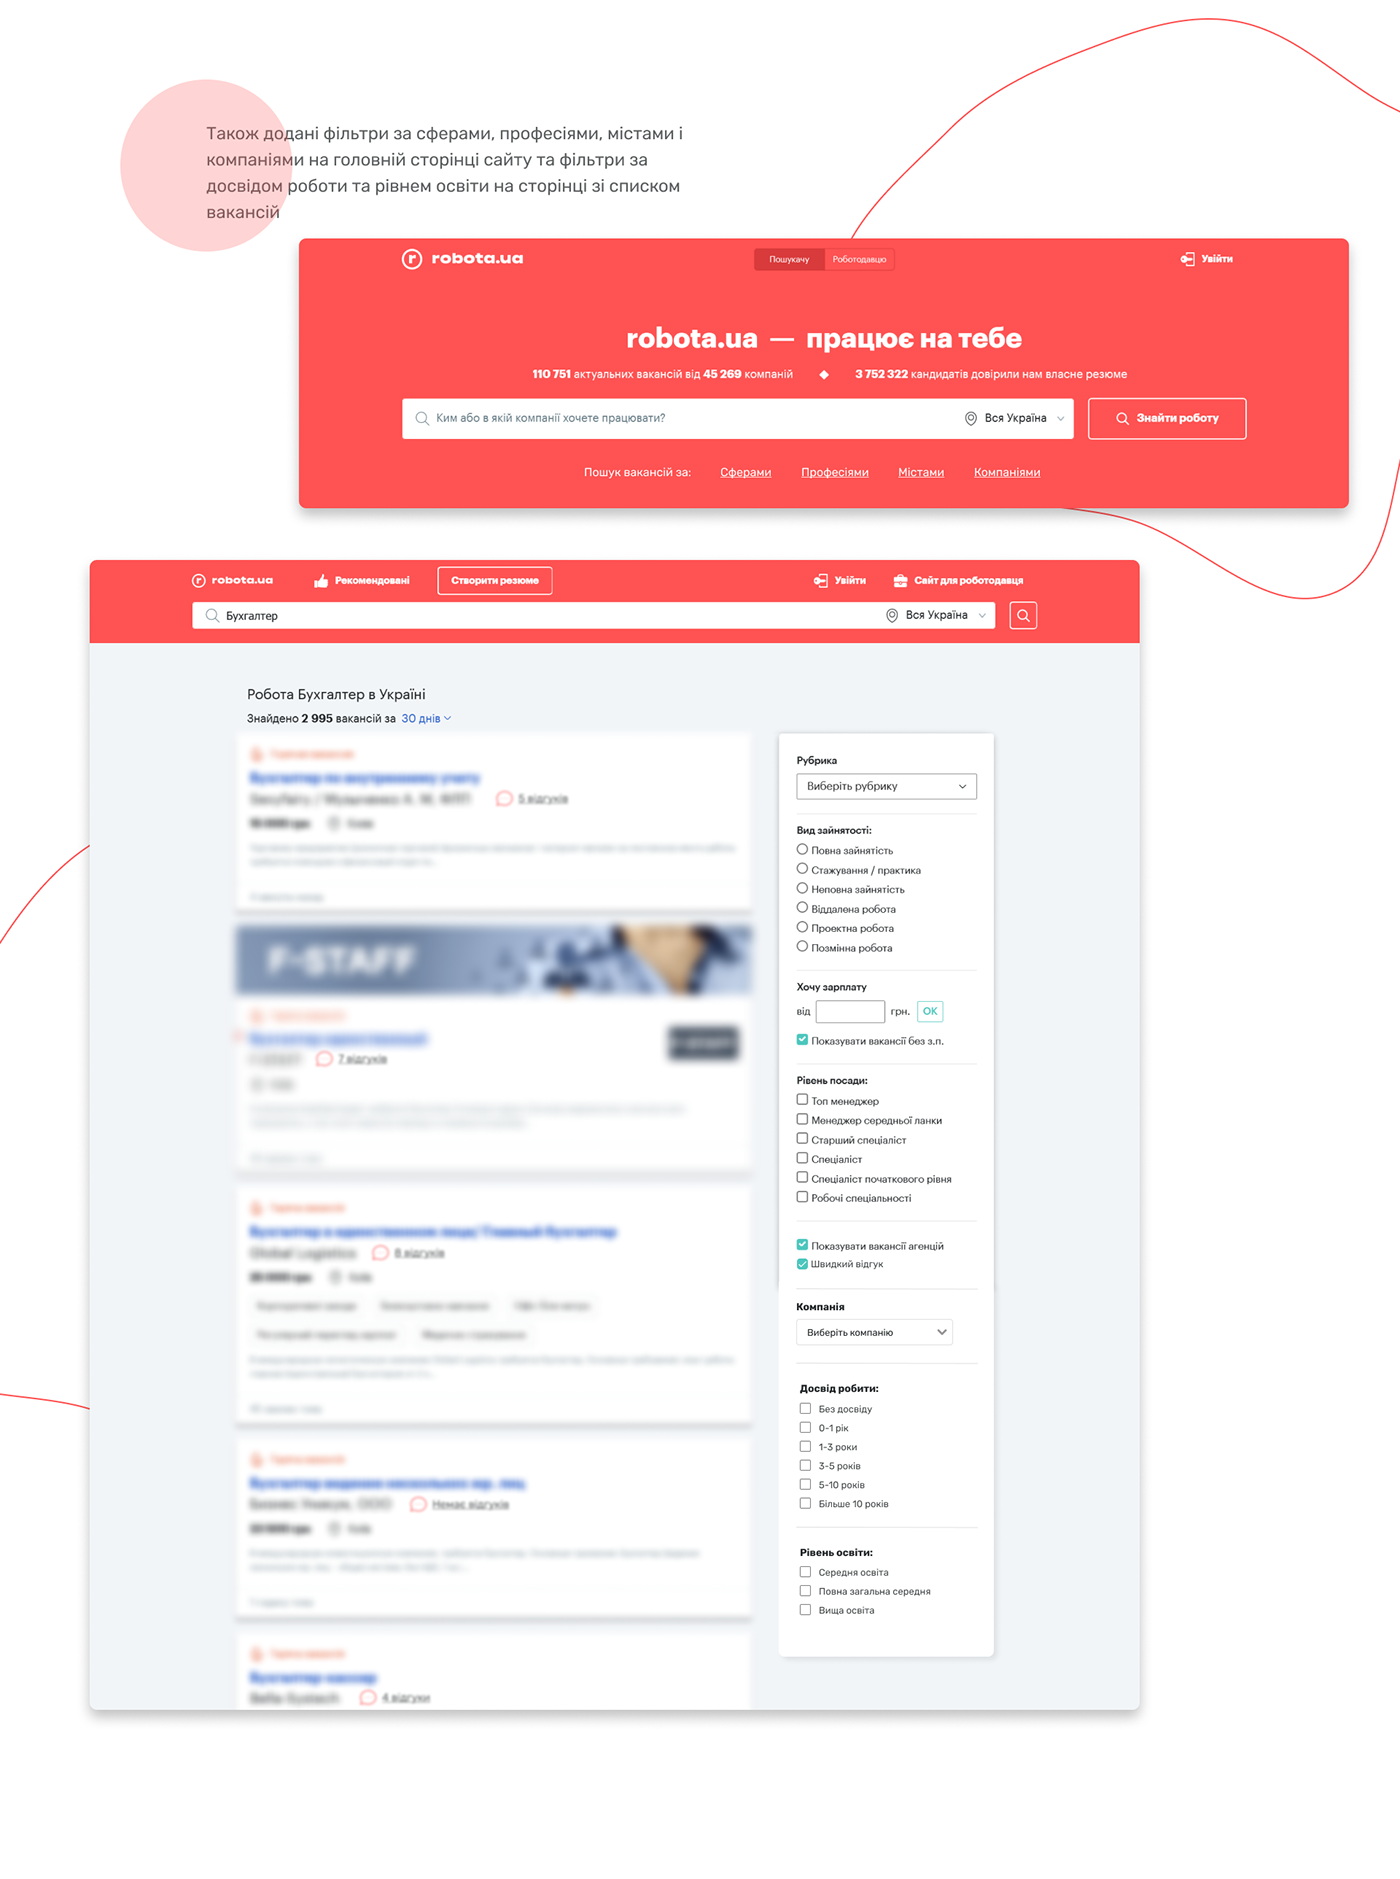 improving registration research site UI/UX user interface UX design